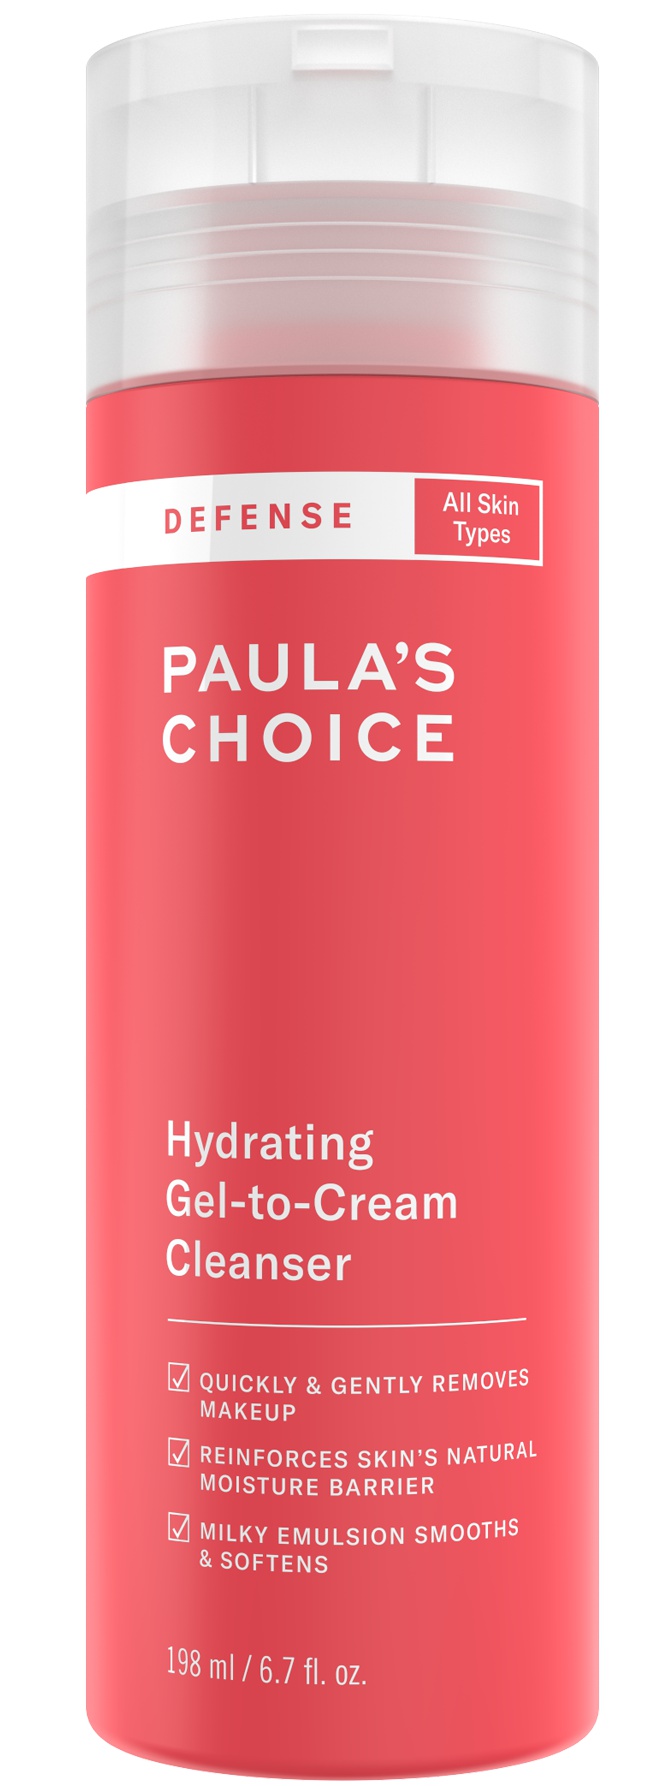 Paula's Choice Defense Hydrating Gel-to-cream Cleanser